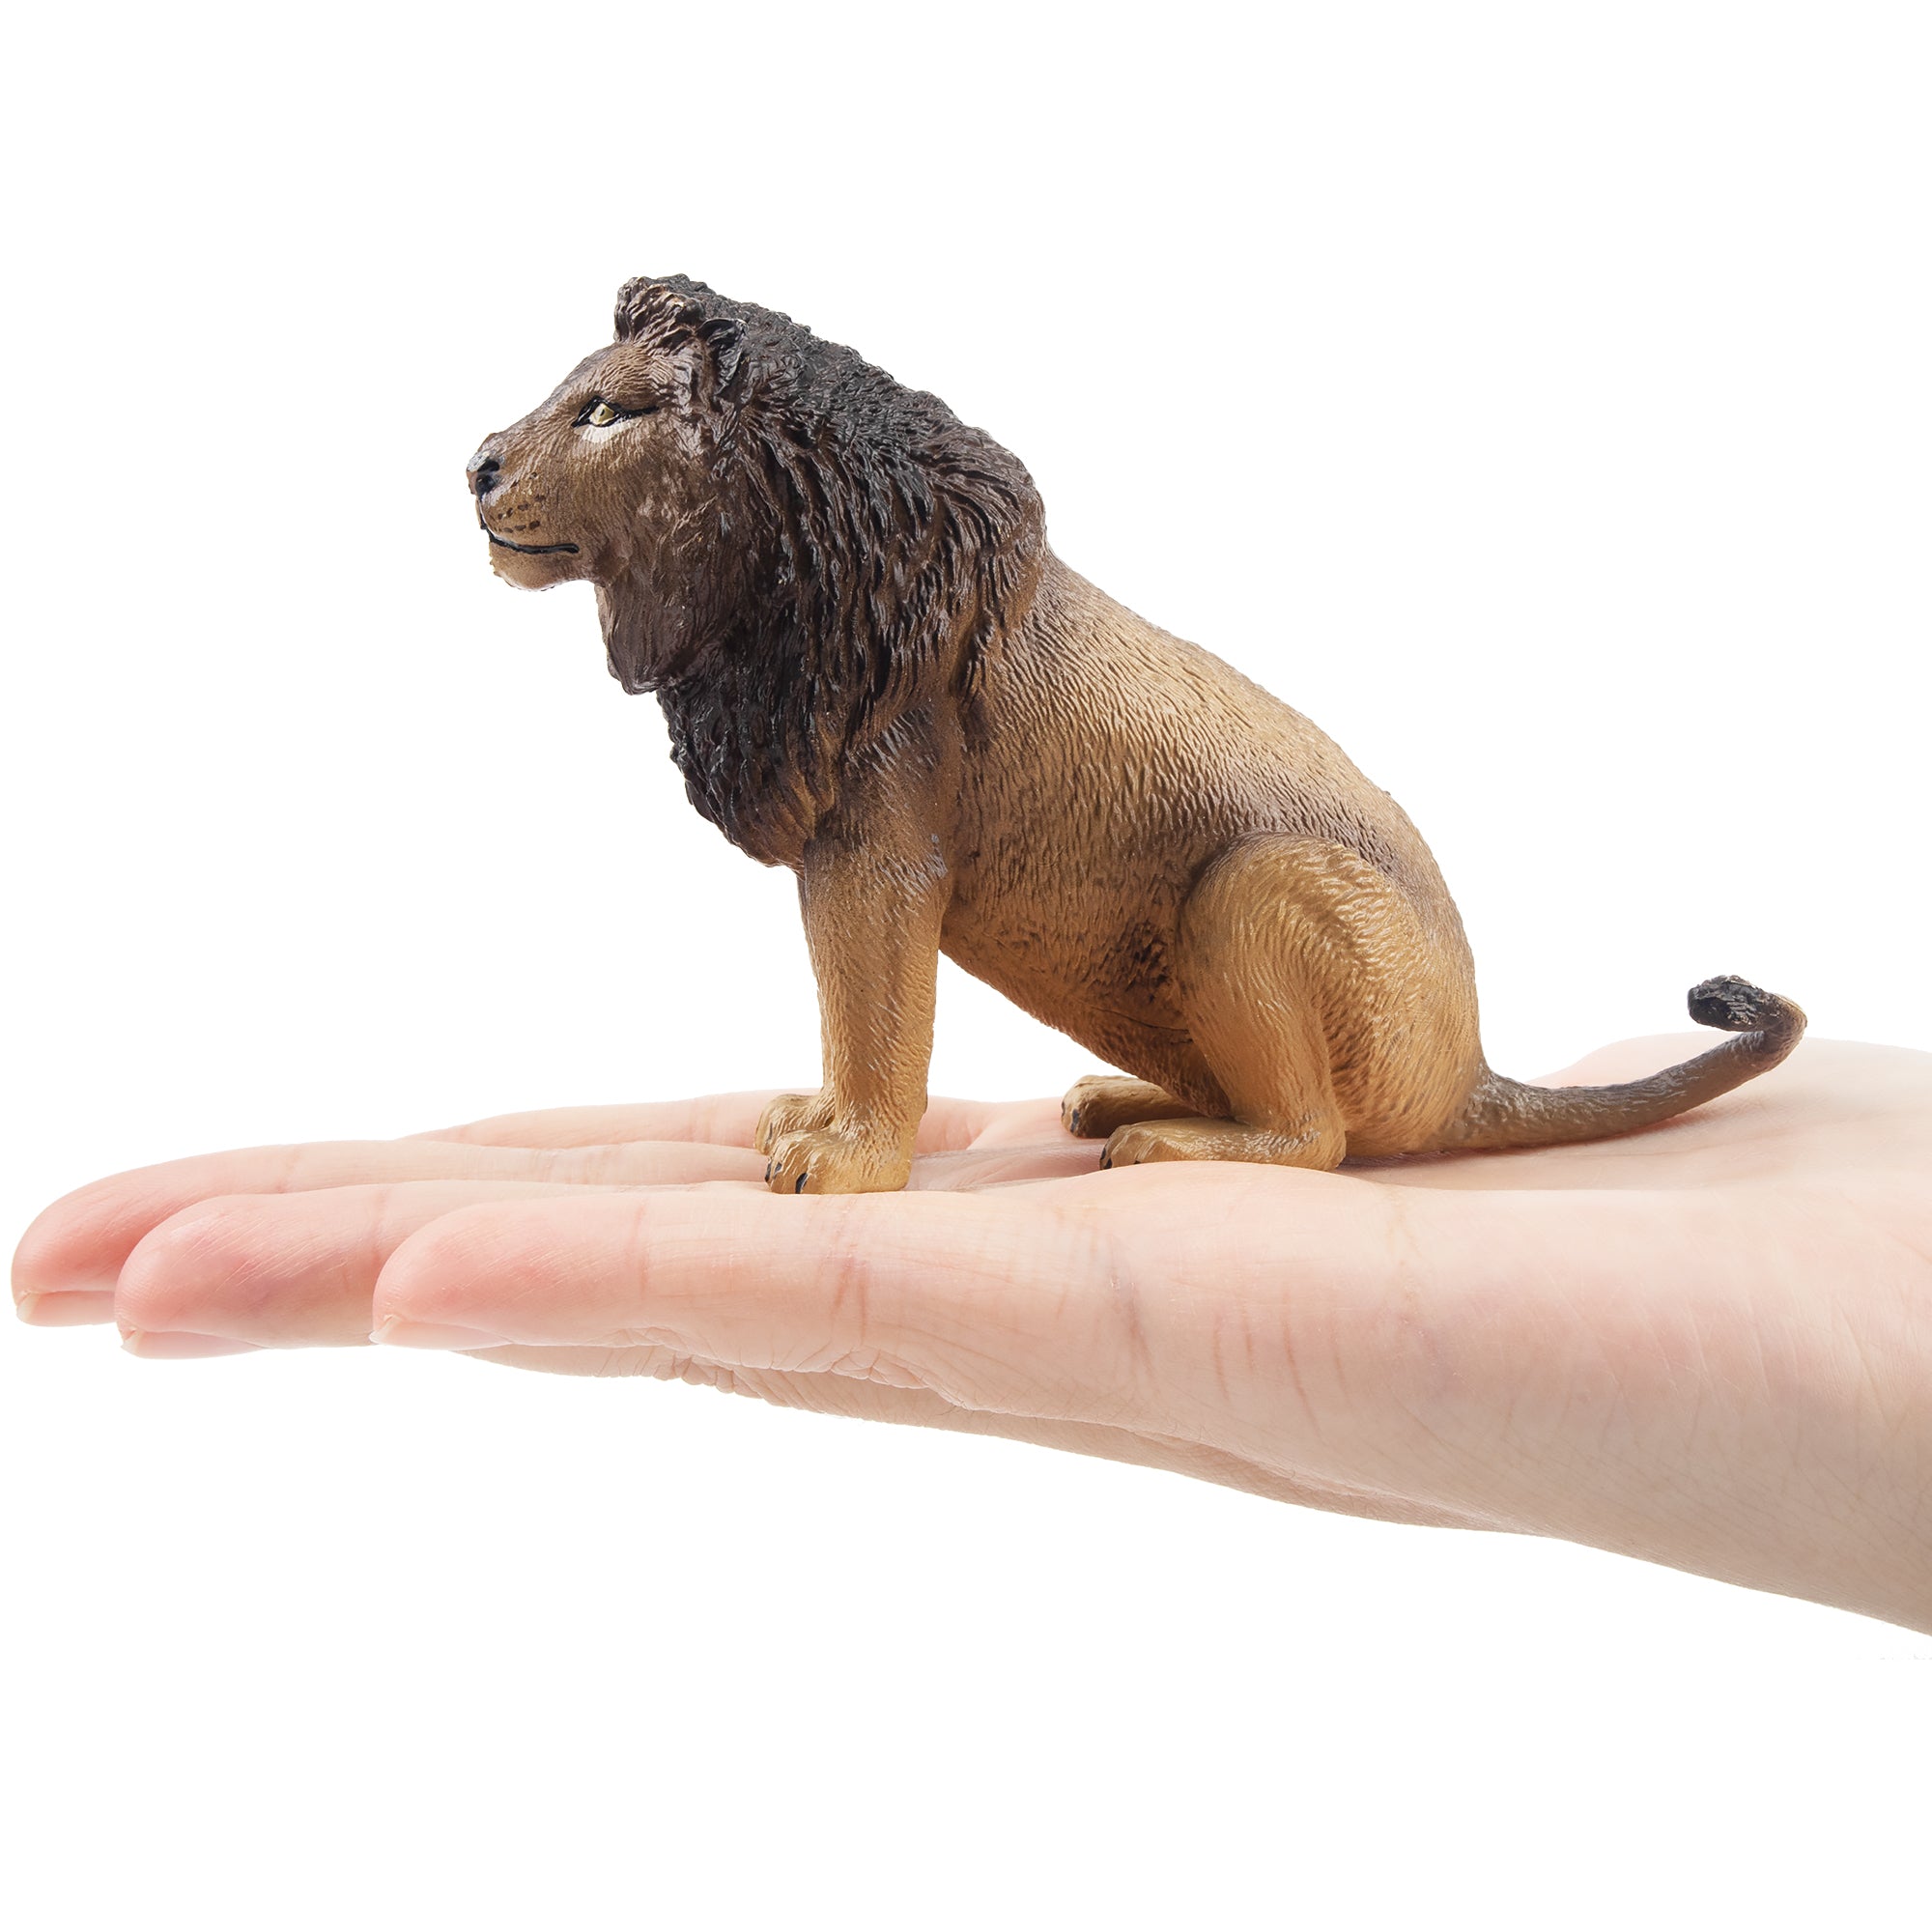 Toymany Lion Figurine Toy-on hand